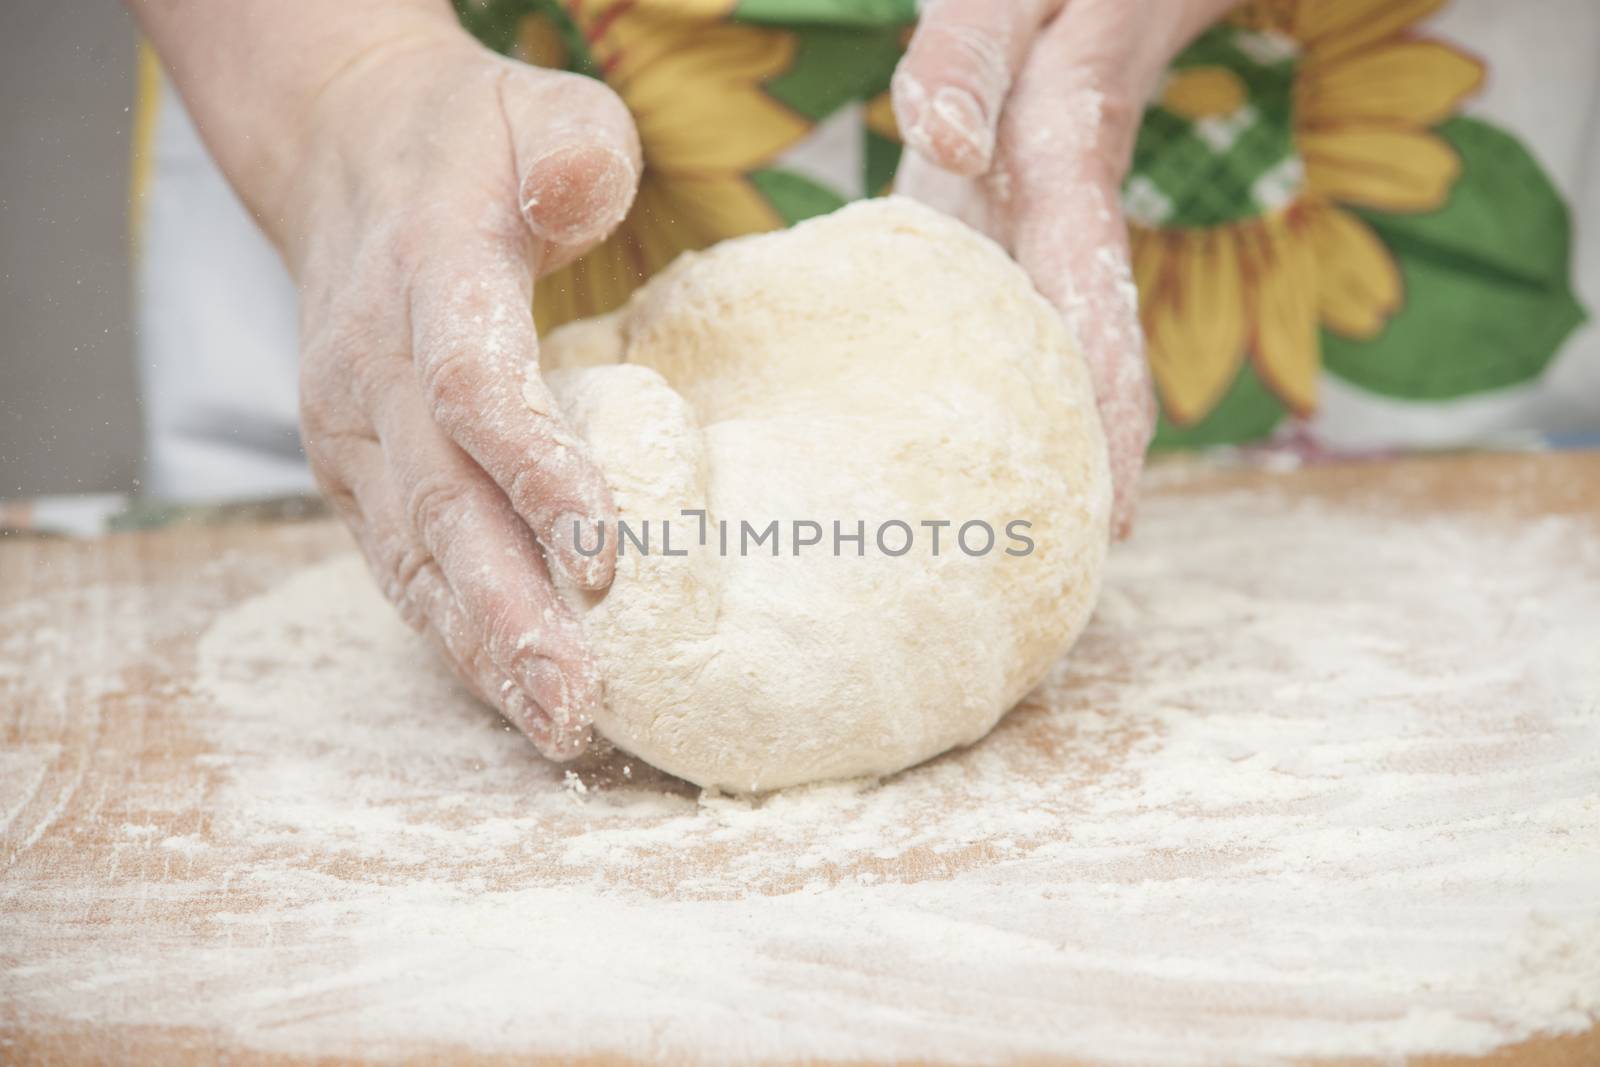 Women's hands preparing fresh yeast dough on wooden table